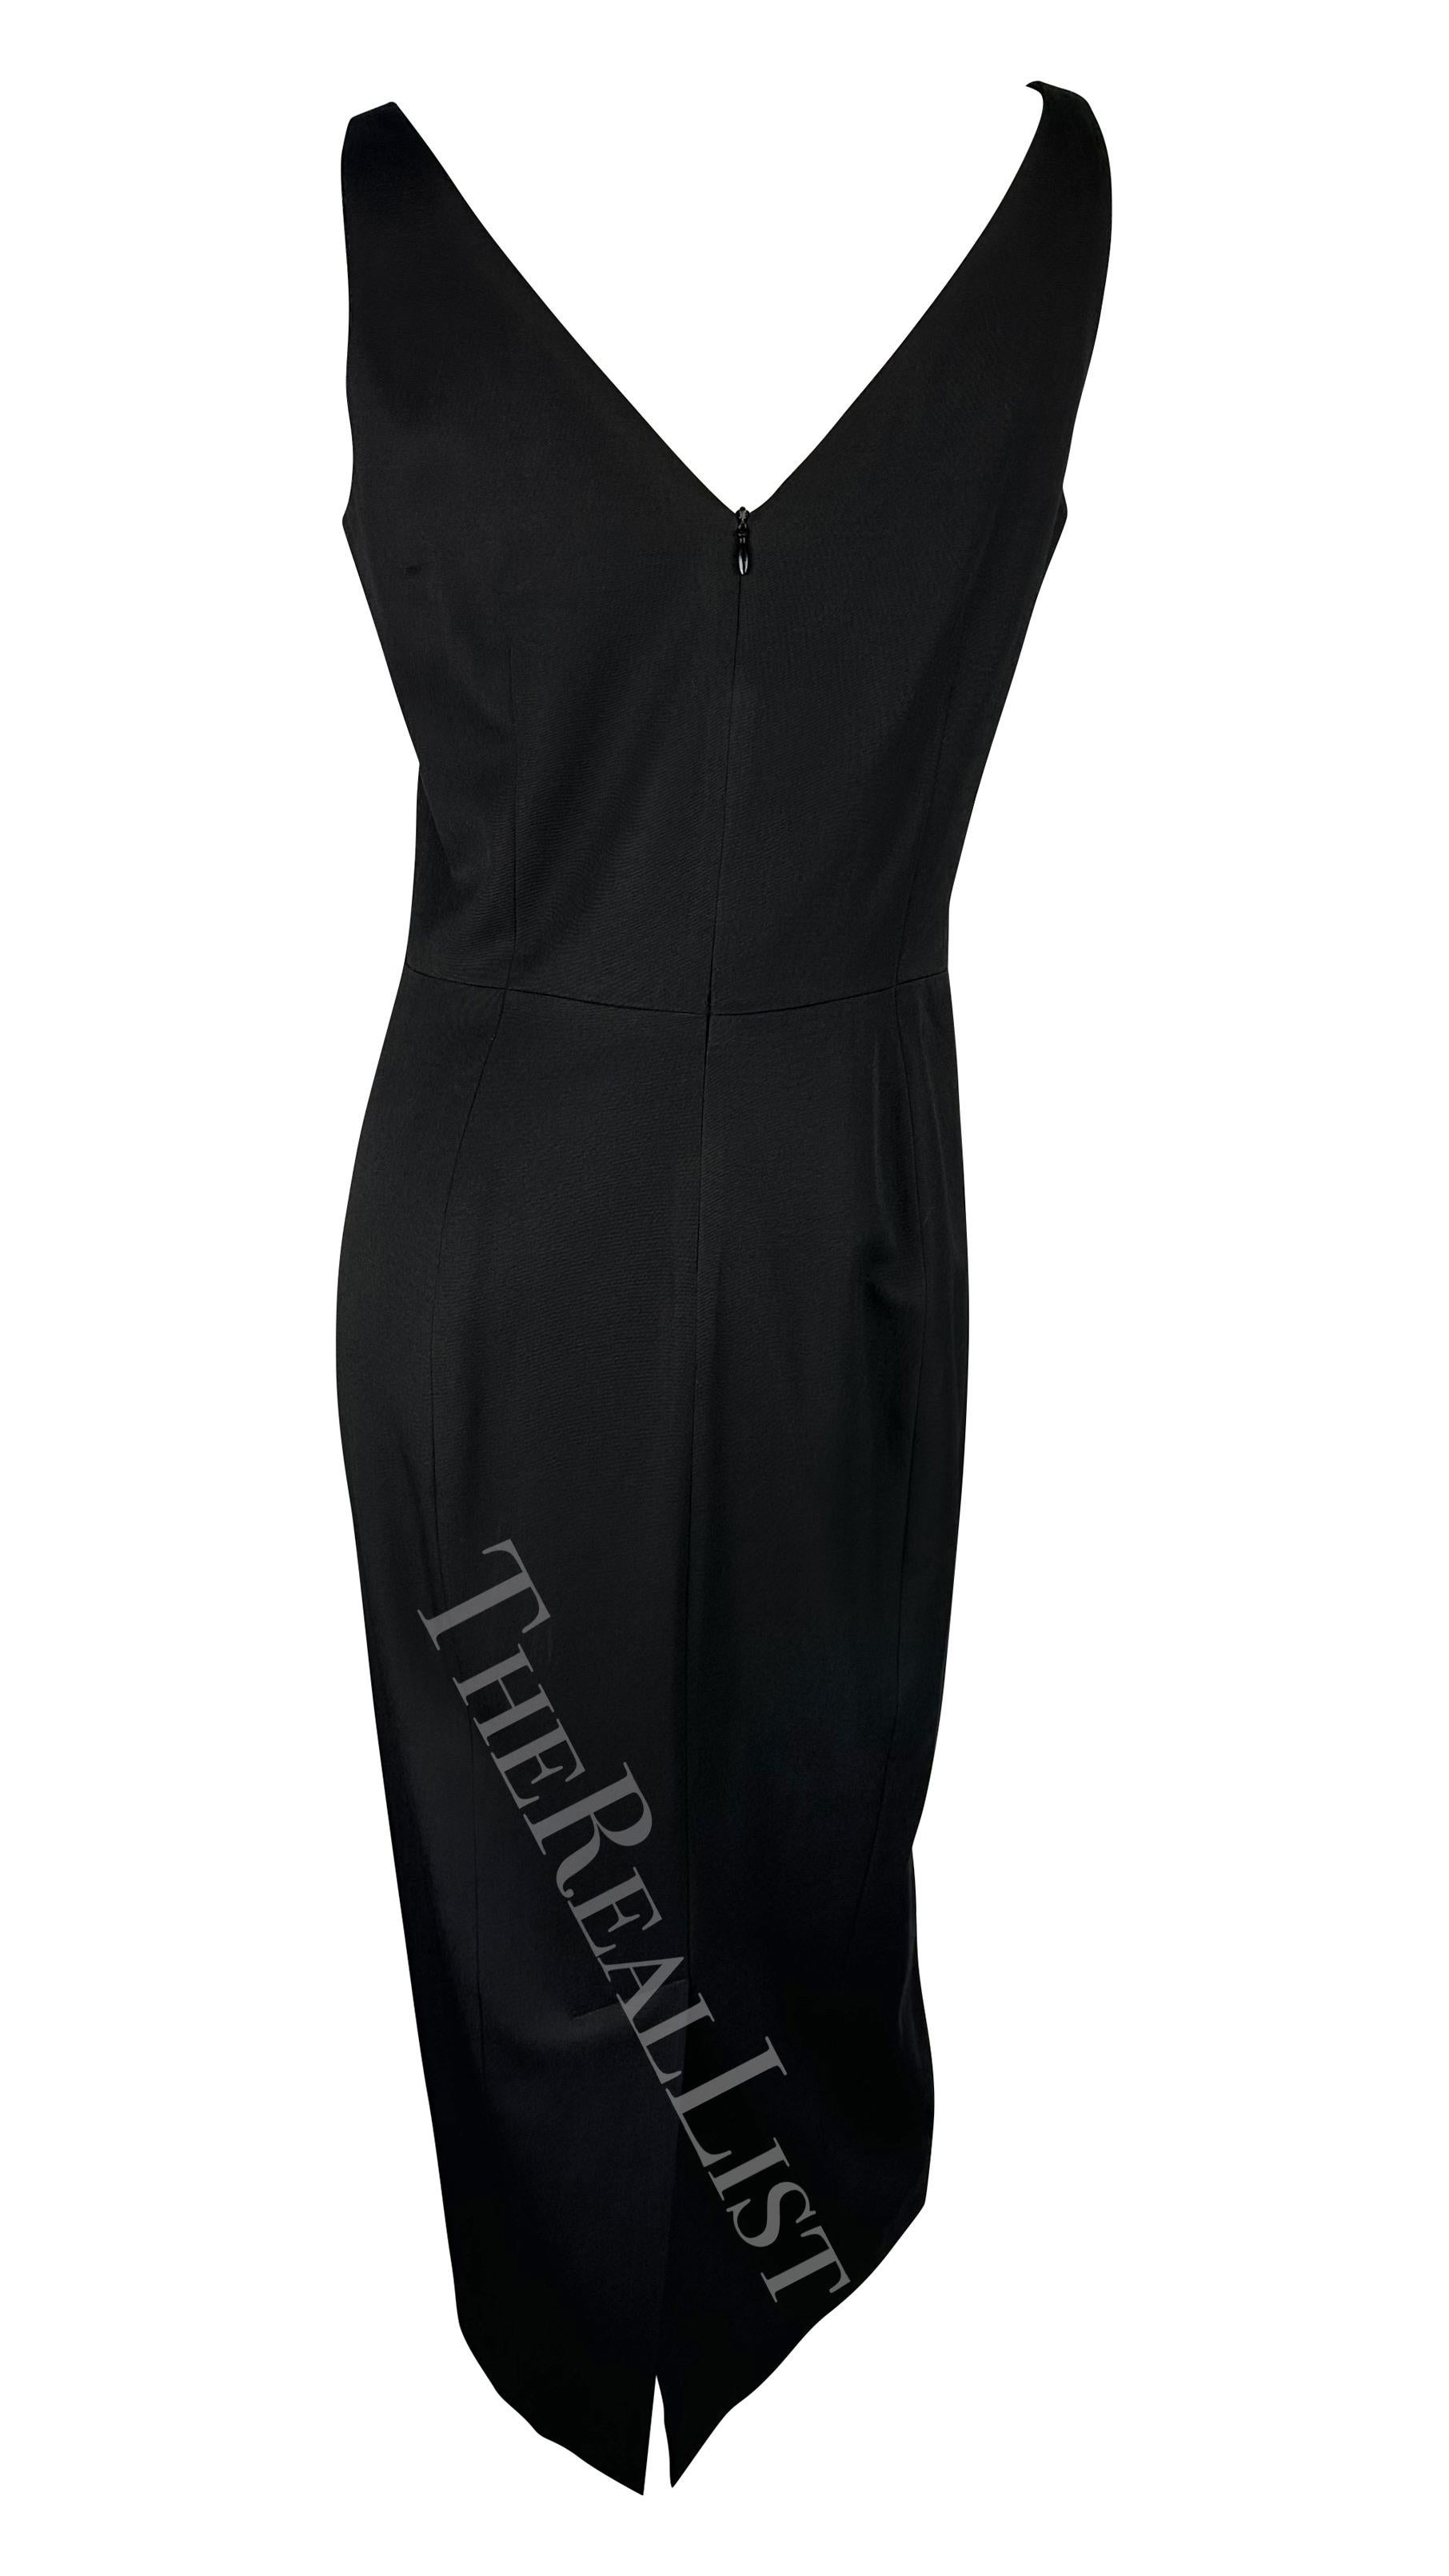 S/S 1995 John Galliano Runway Pin-Up Black Dress Houndstooth Blazer Set For Sale 11